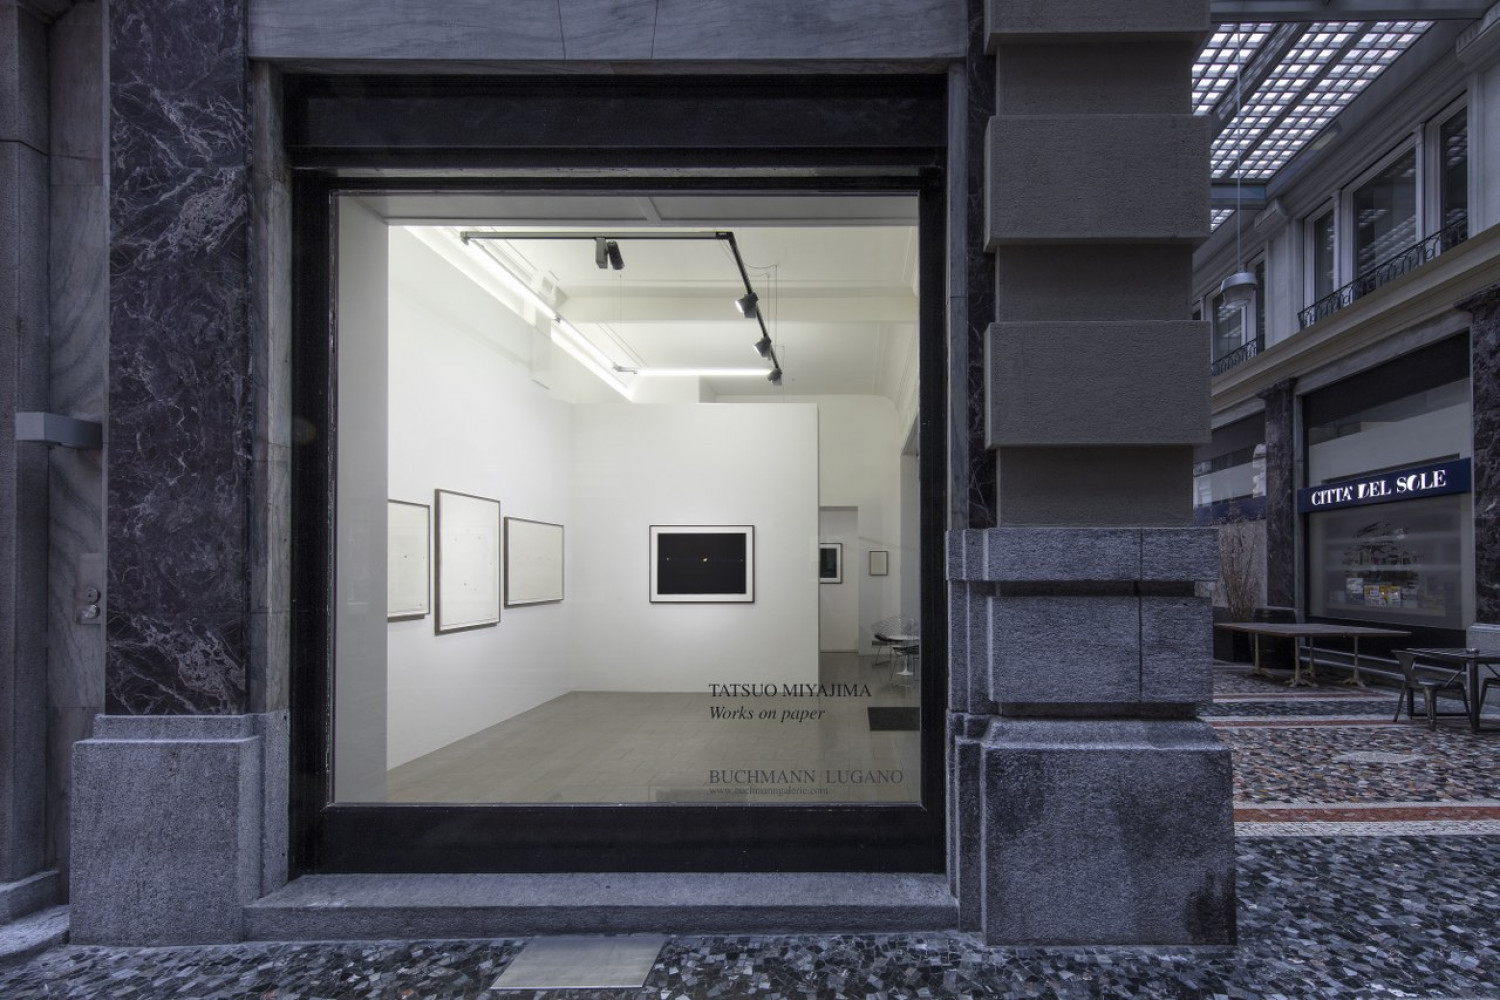 Tatsuo Miyajima, ‘Opere su carta 1995-2018’, Installation view, Buchmann Lugano, 2019